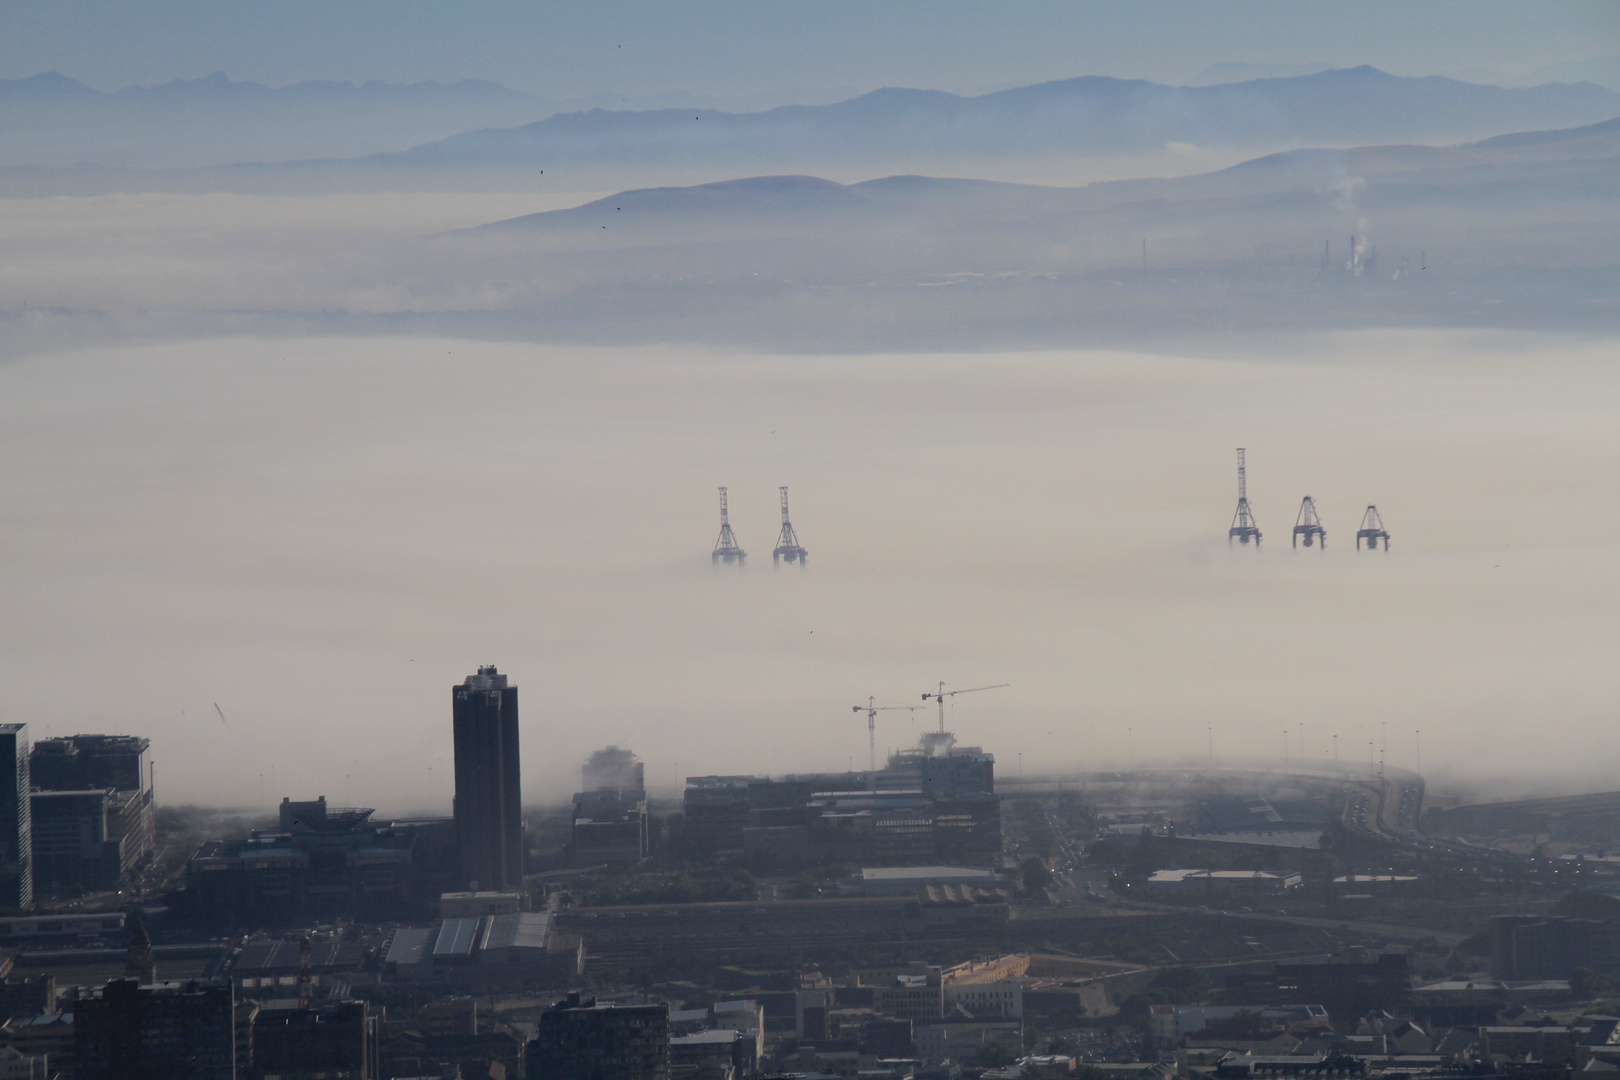 Blick auf Kapstadt im Nebel 